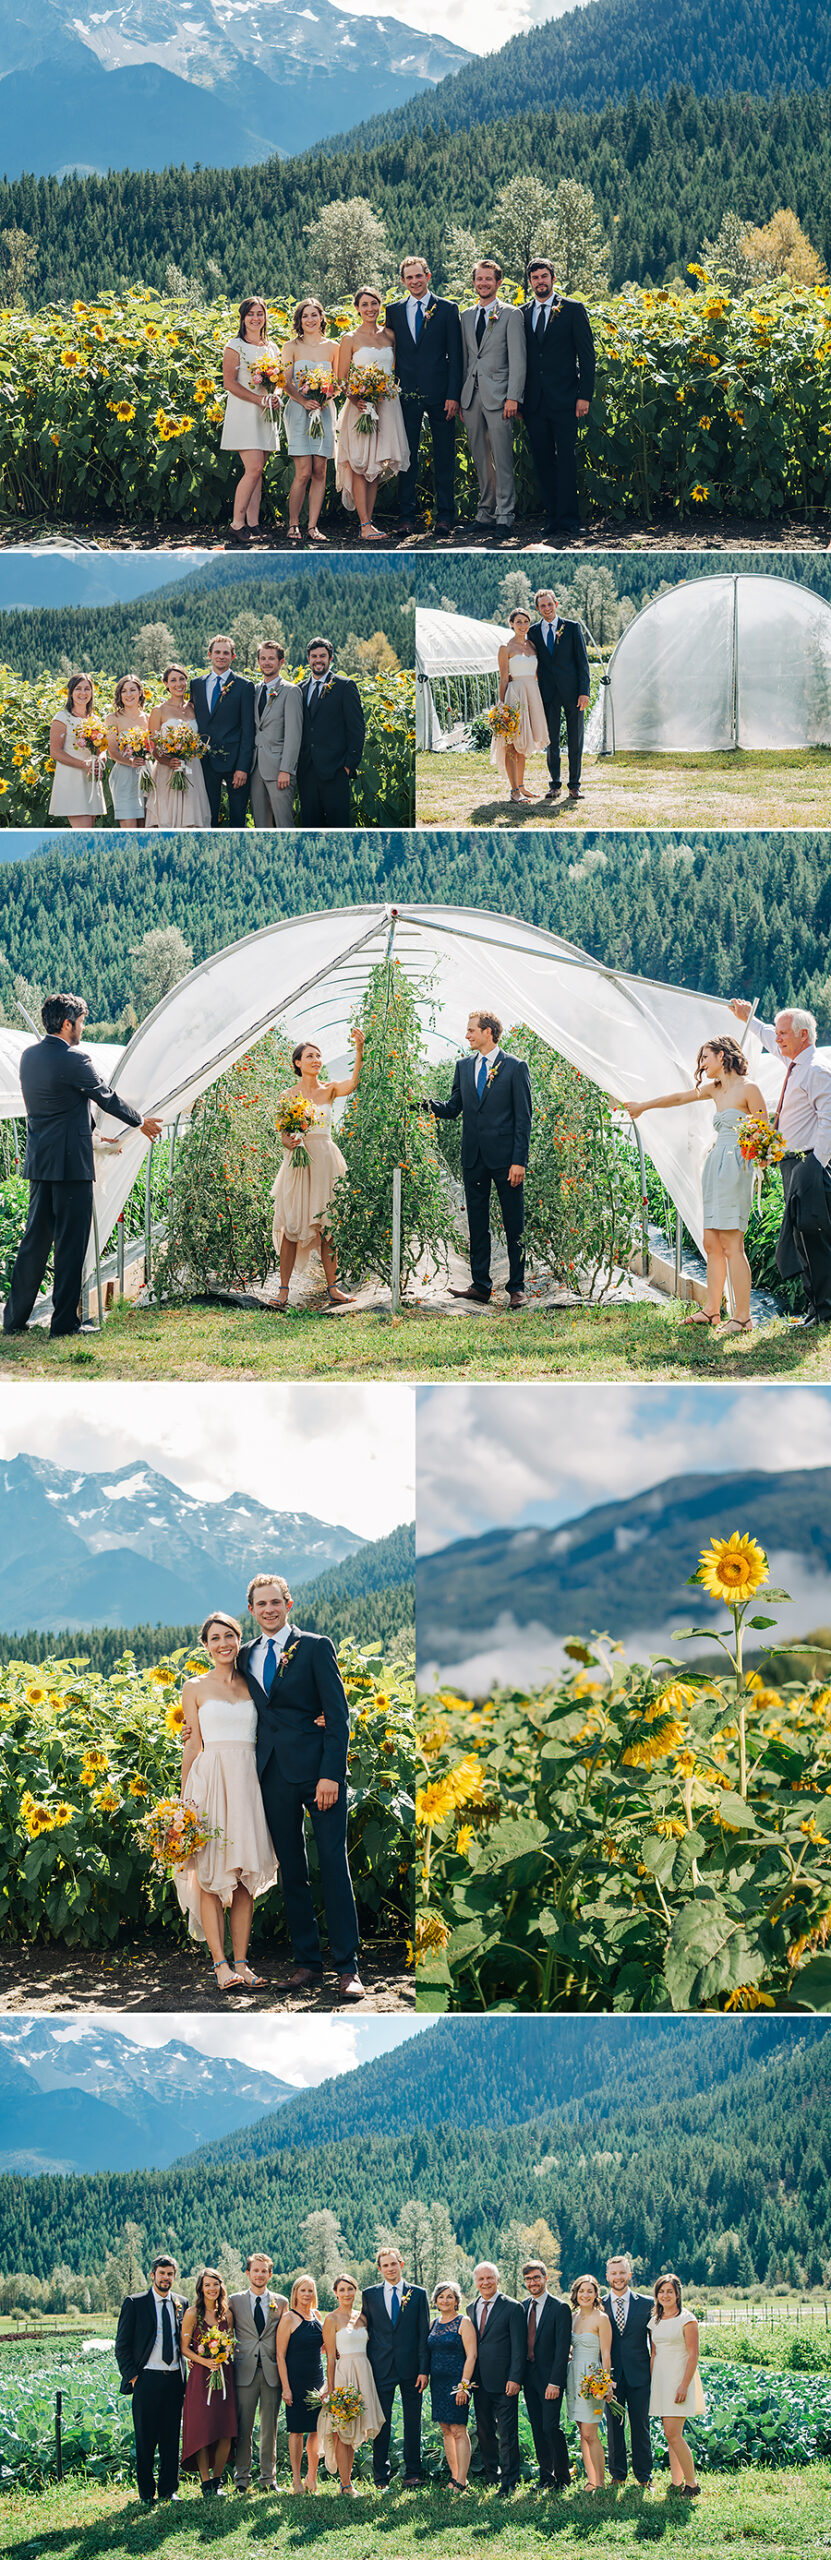 Pemberton BC wedding, farm wedding, plenty wild farms, sunflowers, family portraits